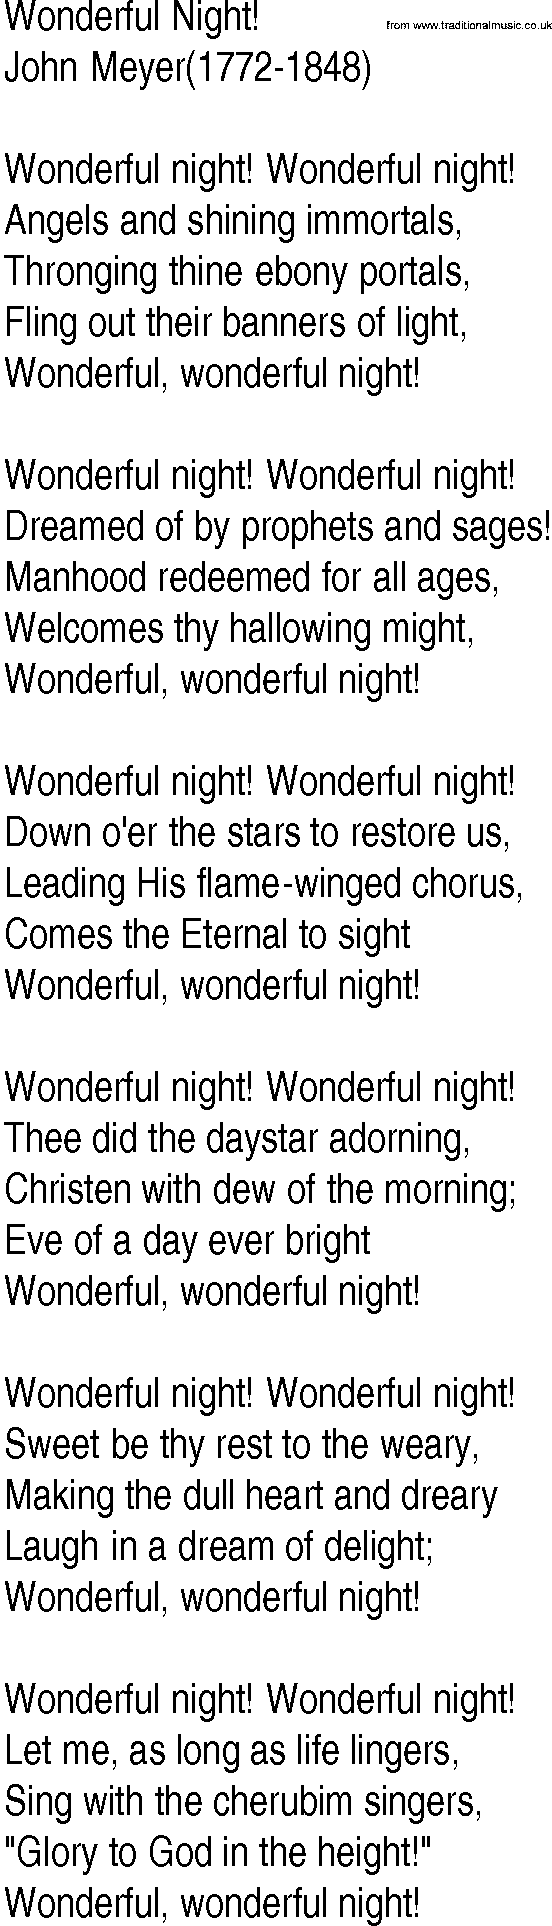 Hymn and Gospel Song: Wonderful Night! by John Meyer lyrics